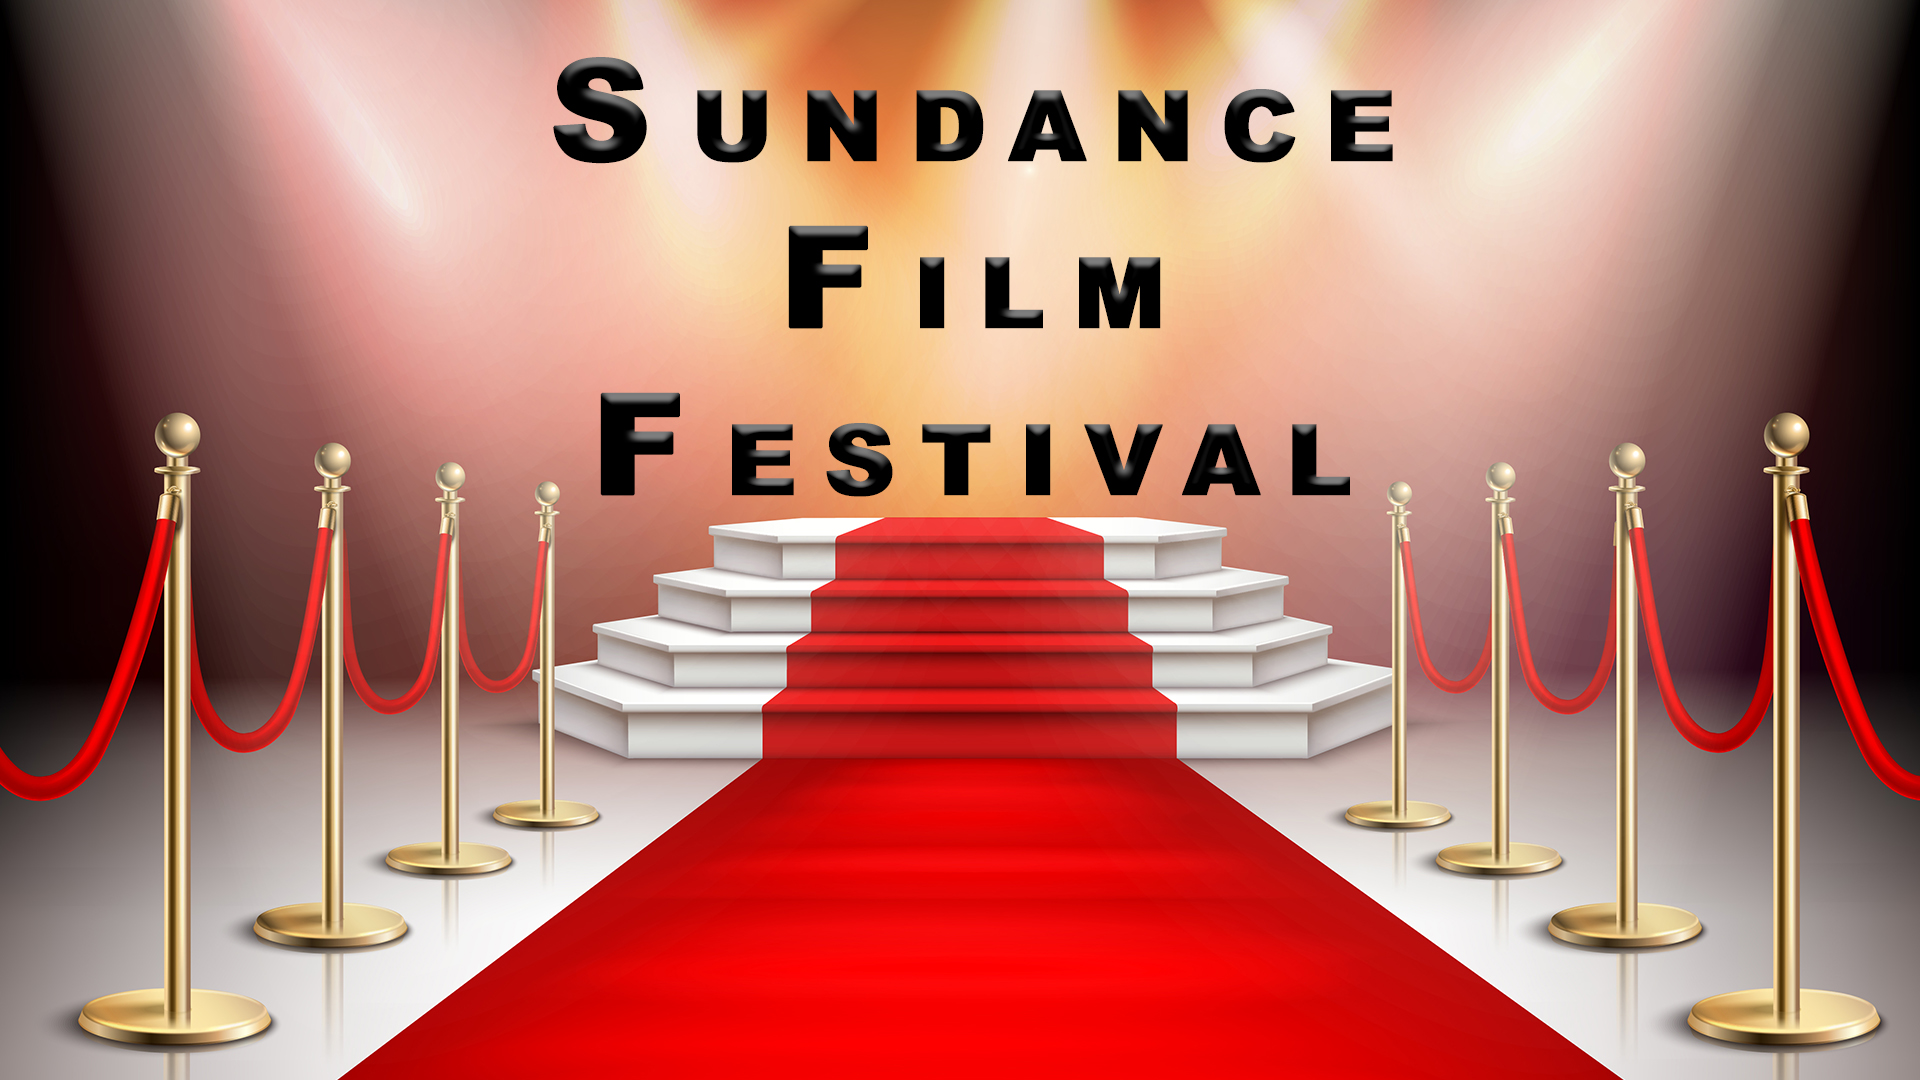 What happens at the Sundance Film Festival?